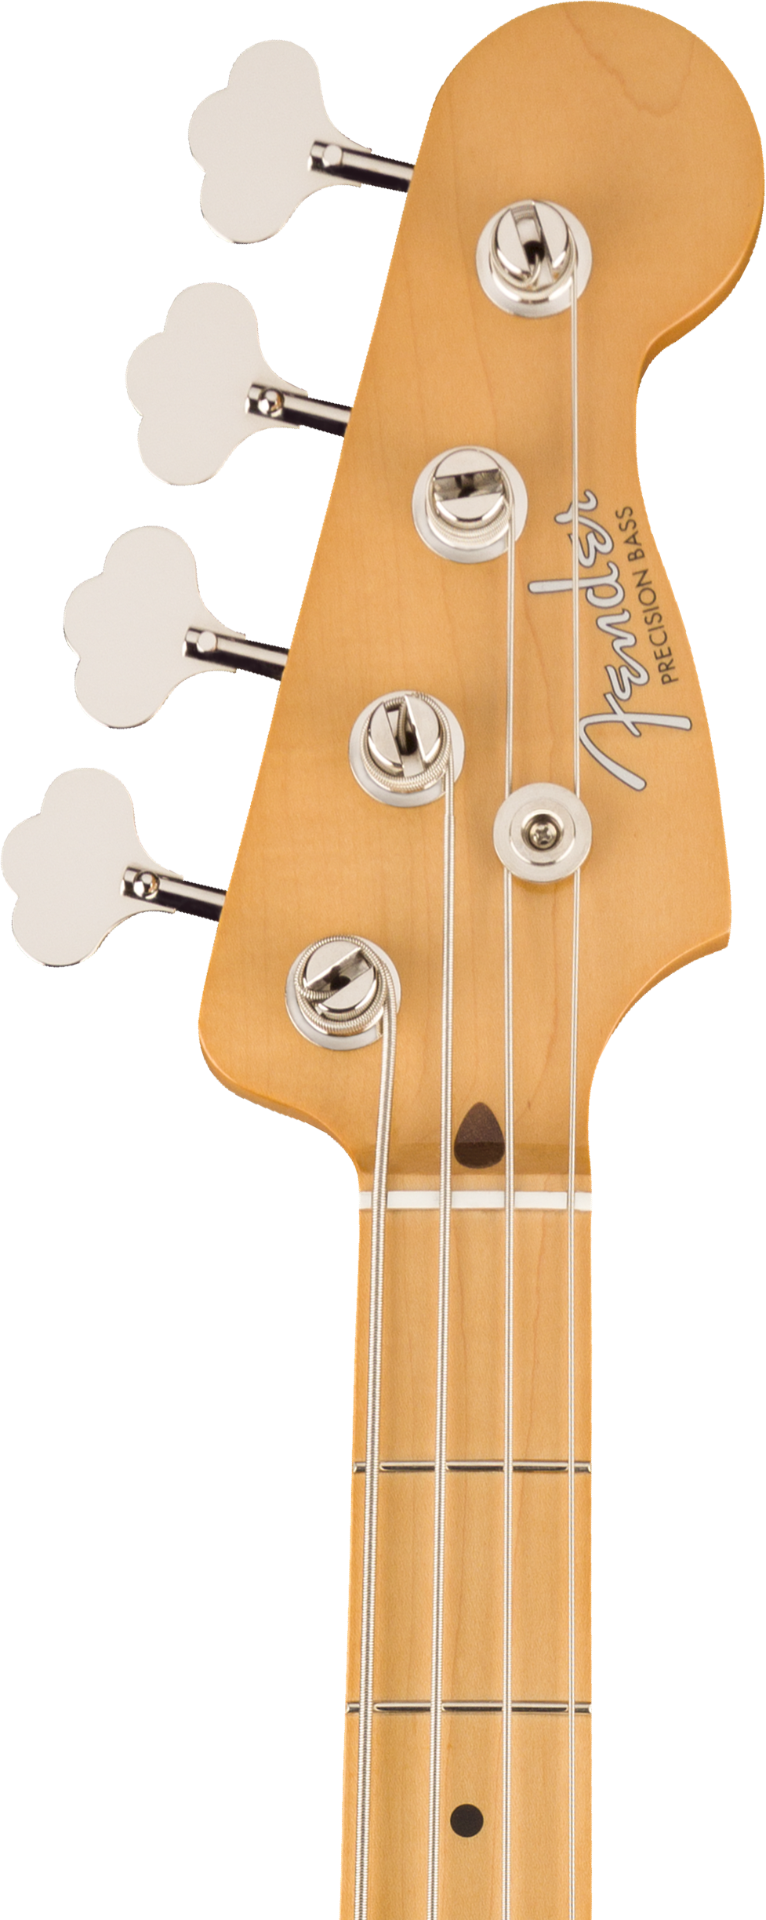 Fender Vintera '50s Precision Bass - Maple Fingerboard - Sea Foam Green